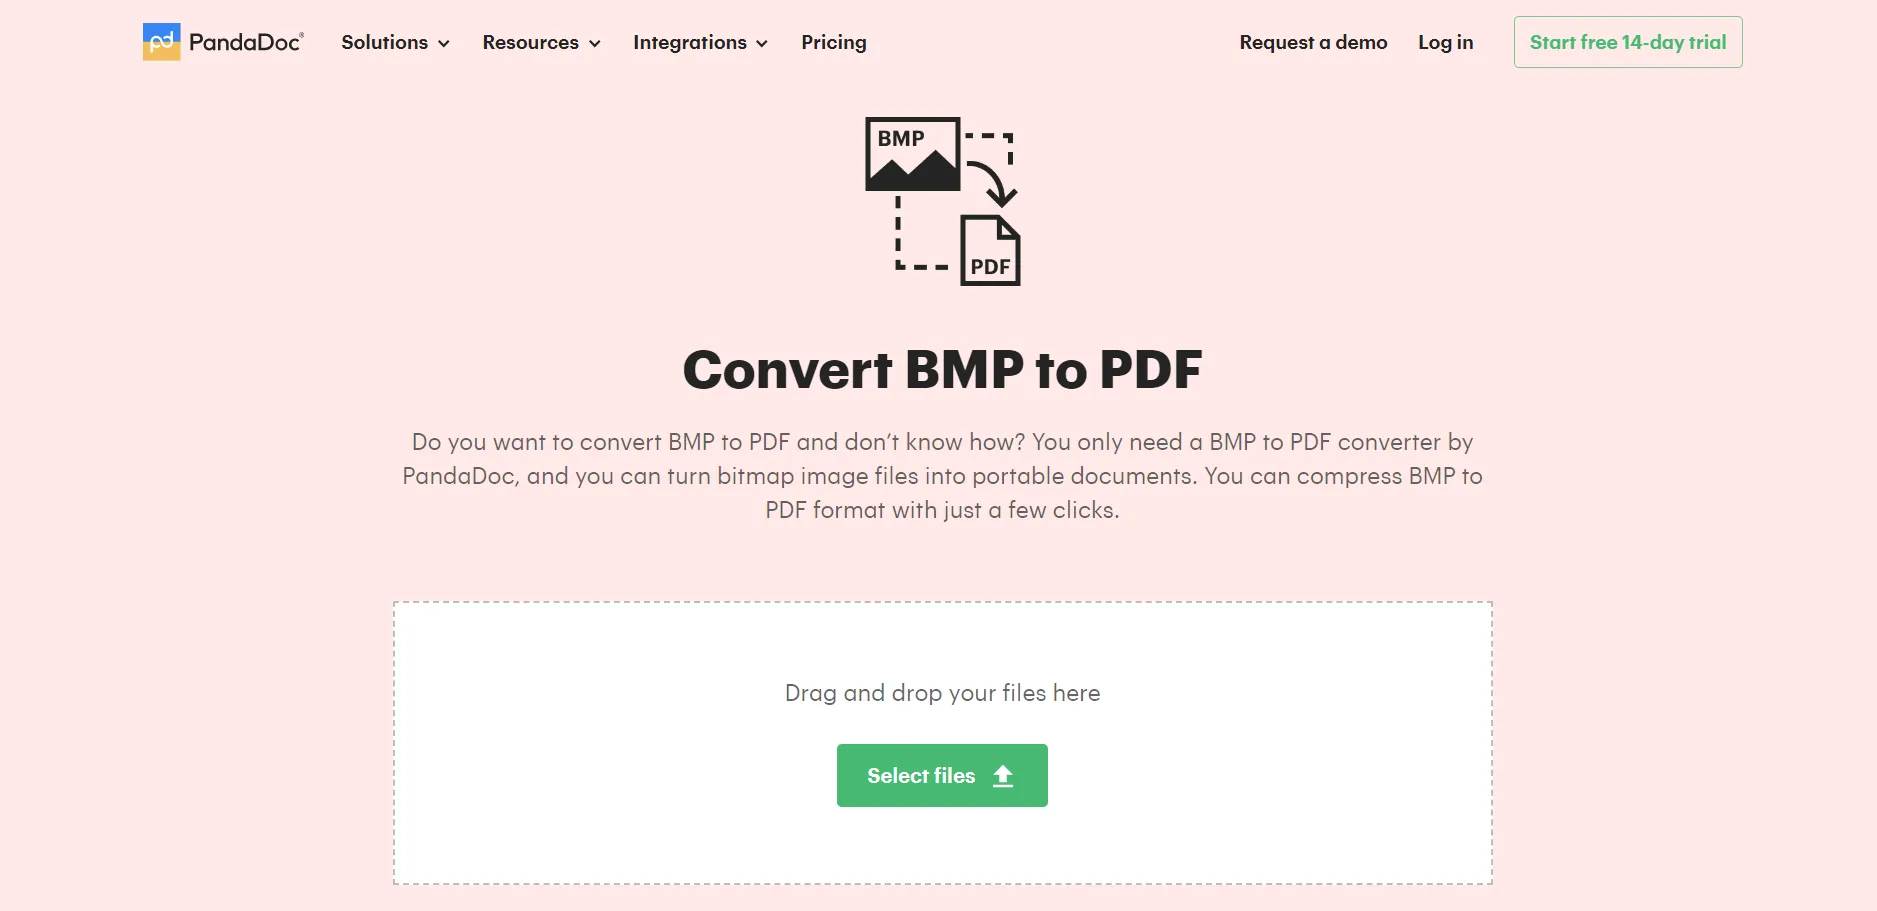 bmp to pdf converter online pandadoc